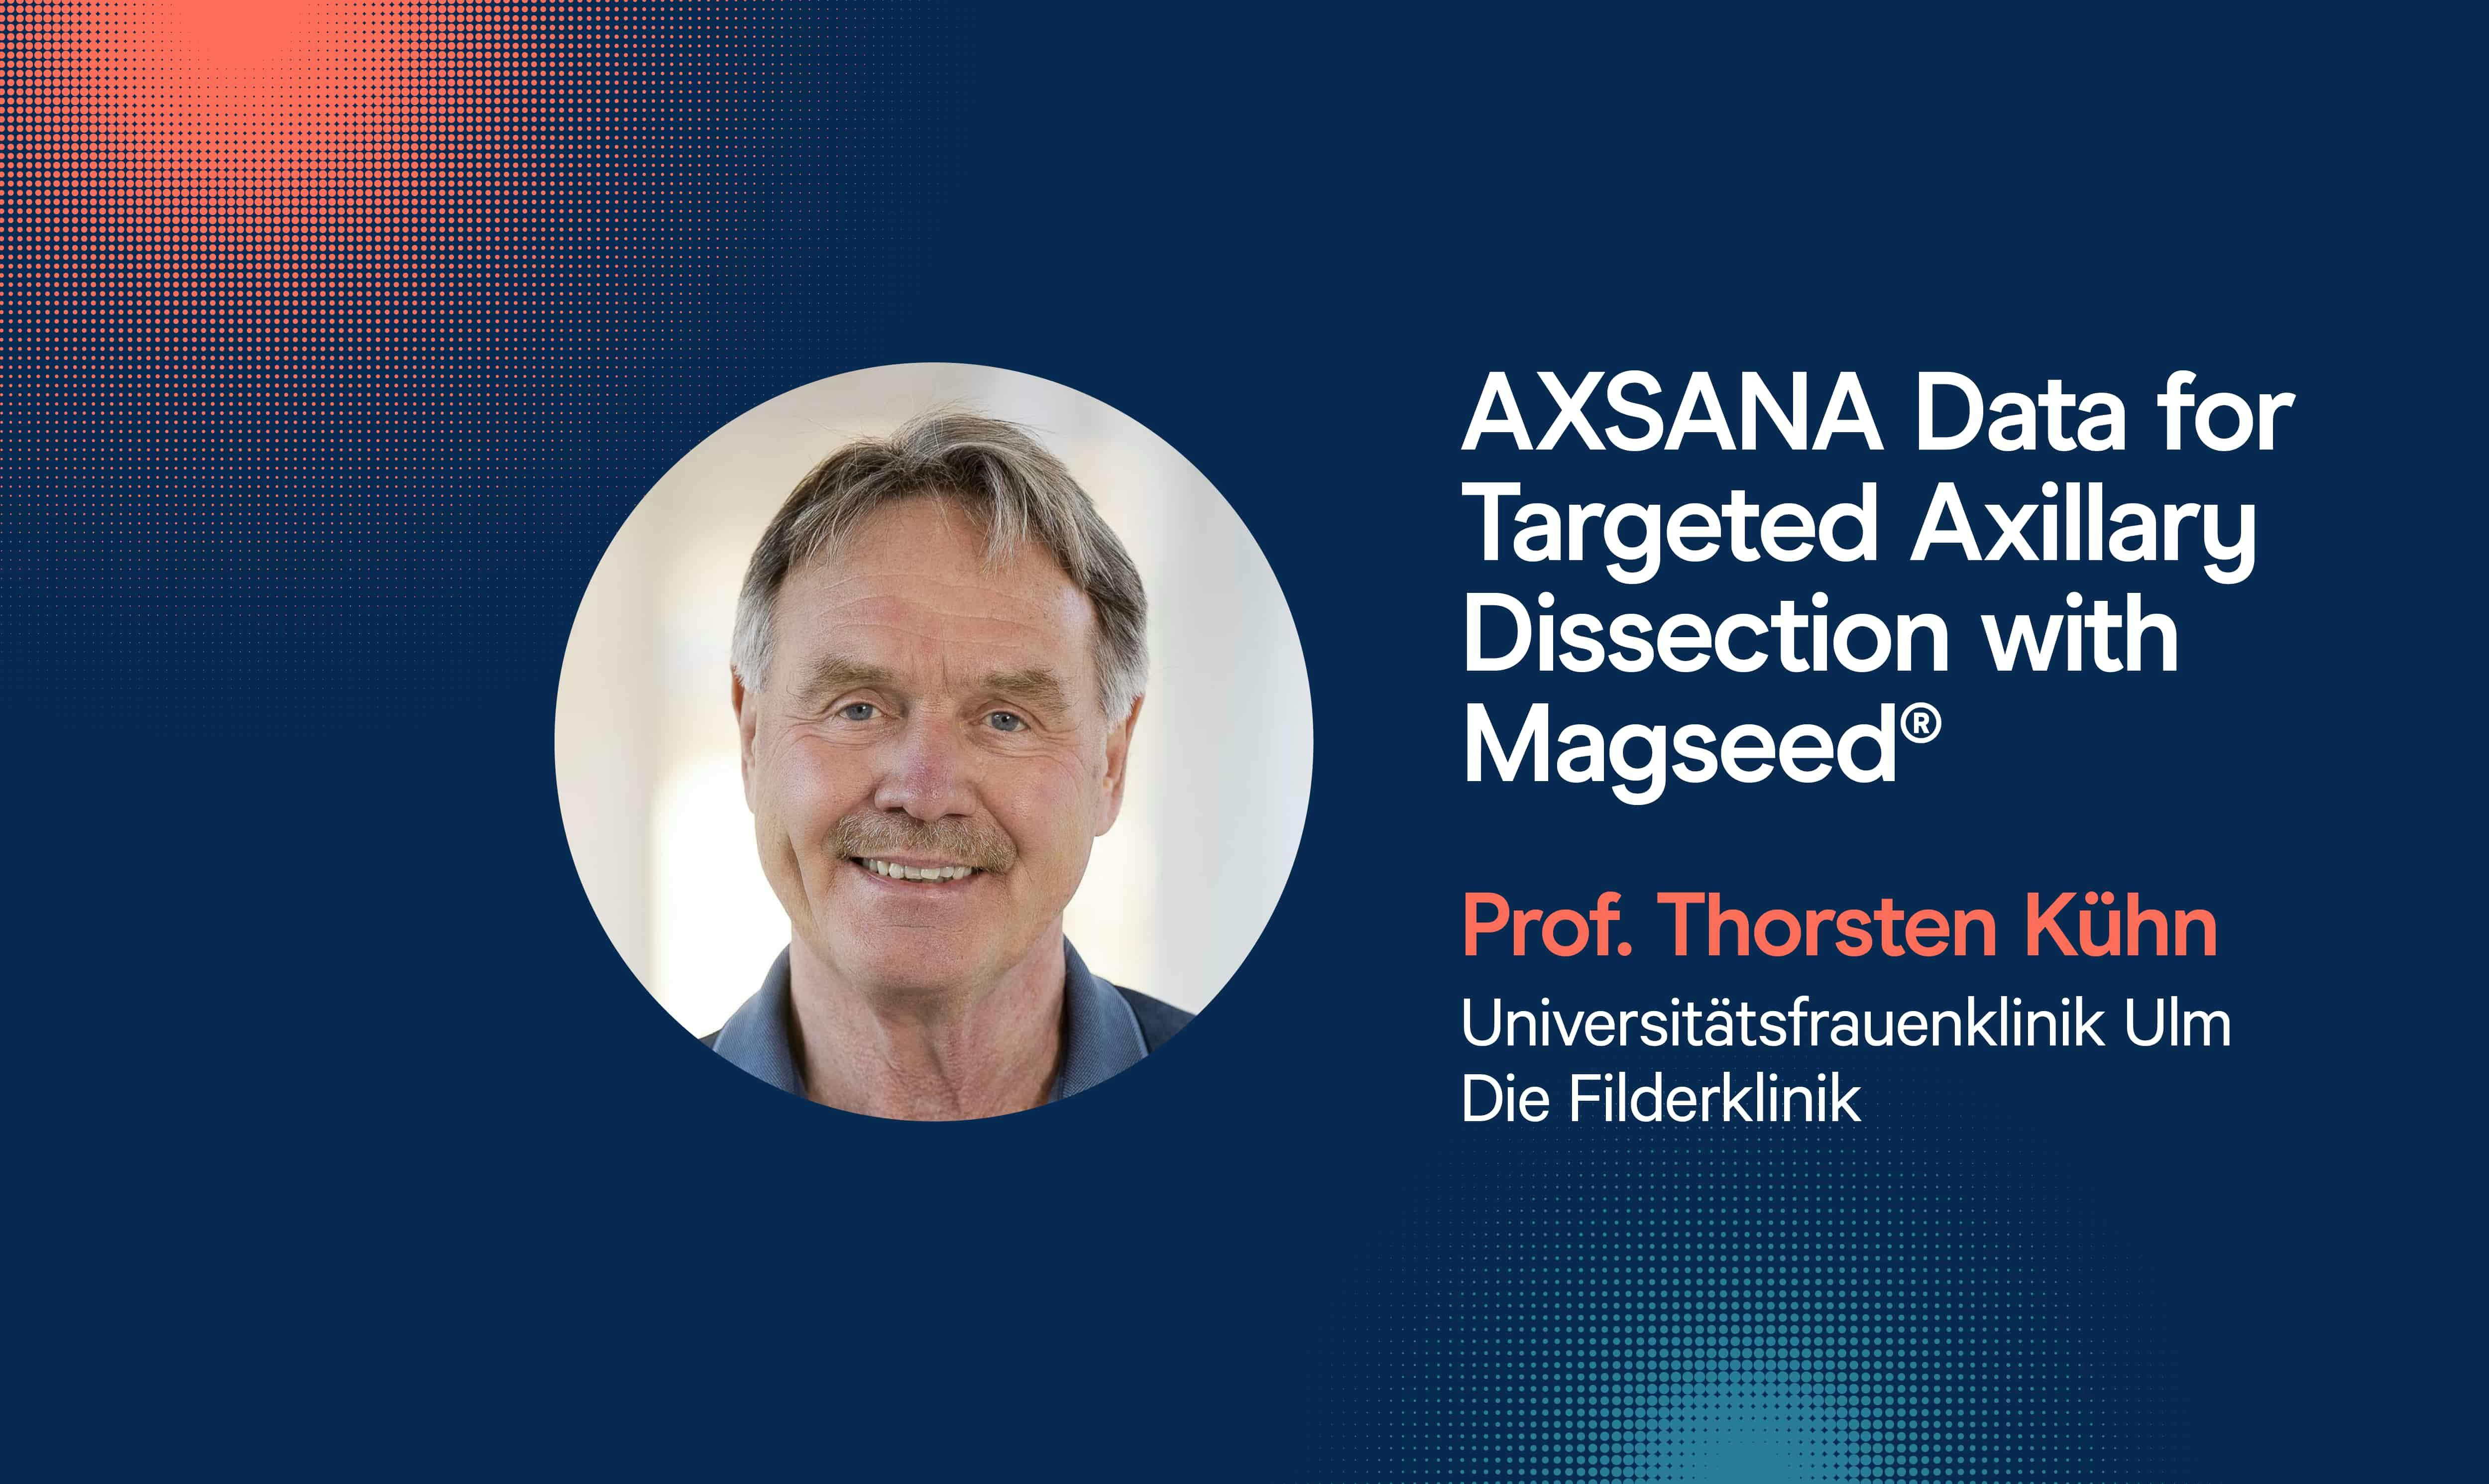 Axana Data for TAD by Prof. Thorsten Kuhn